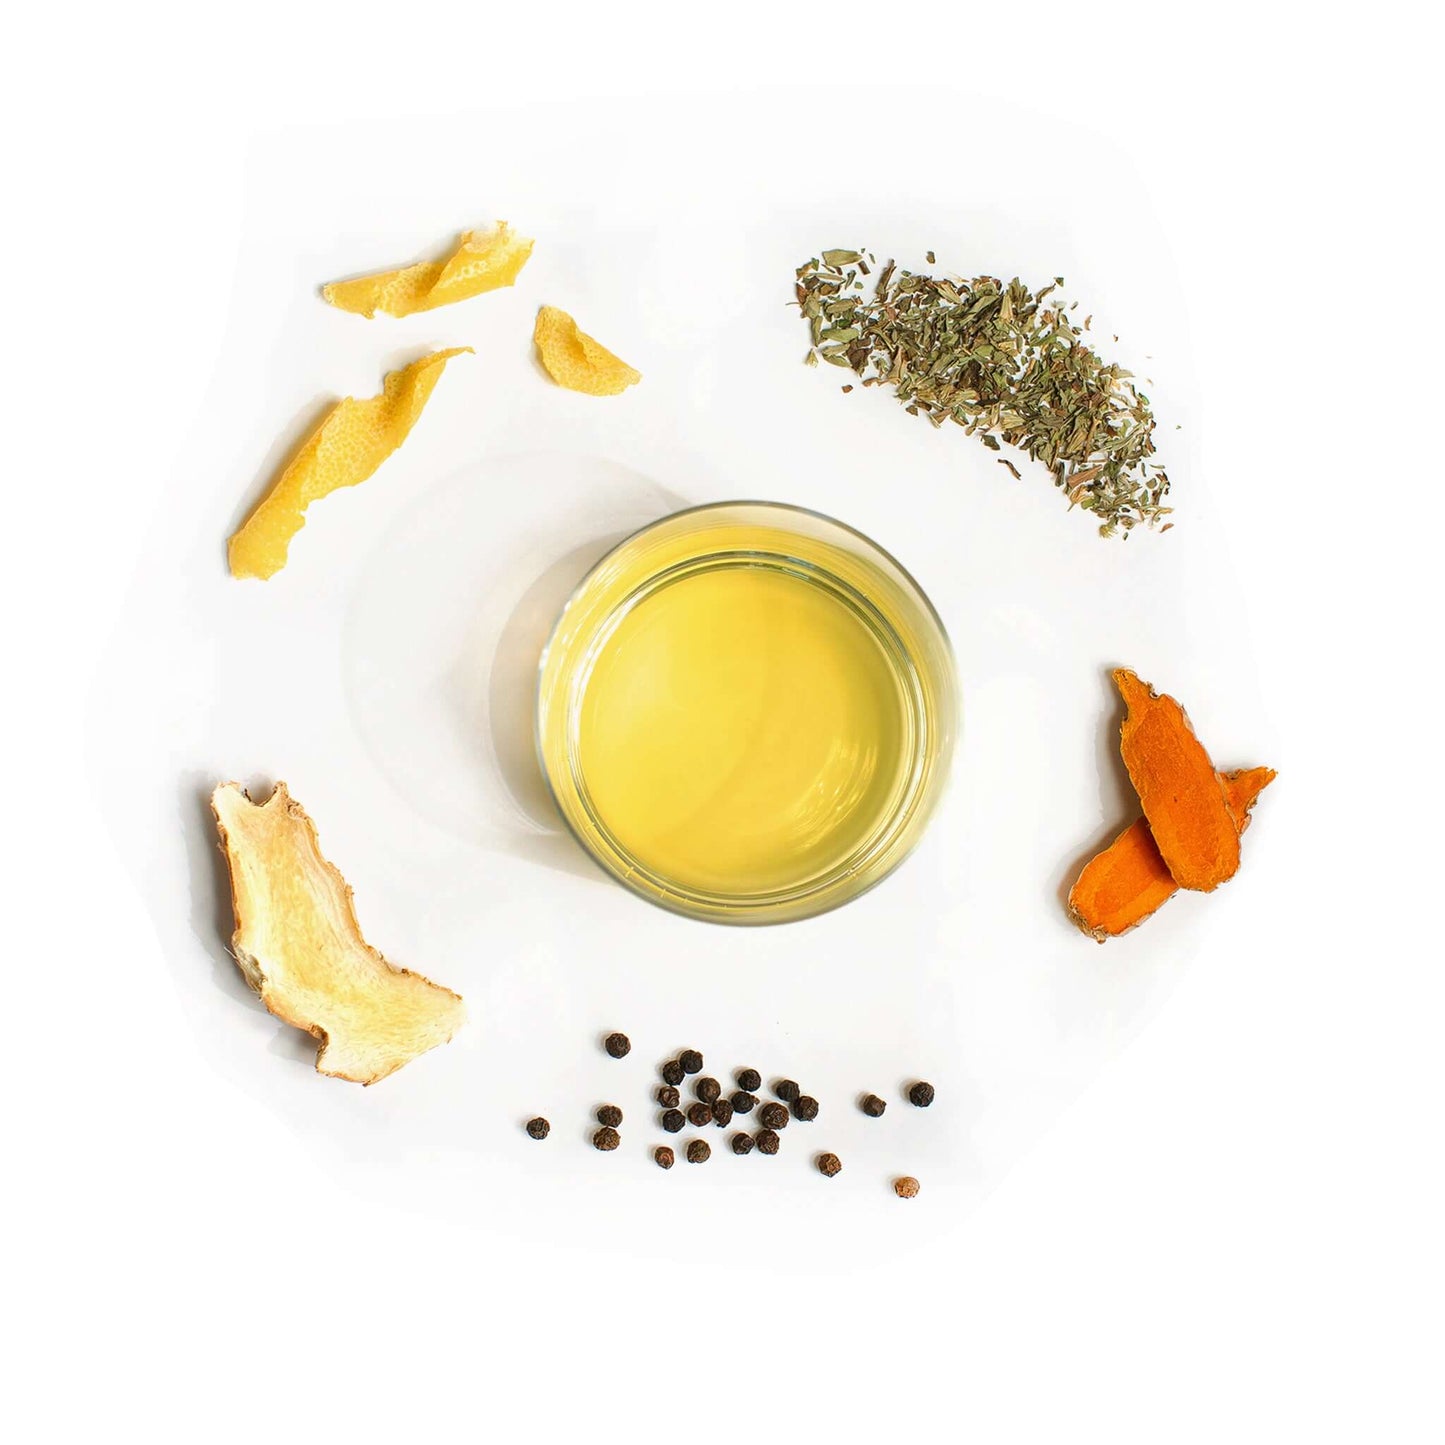 Organic Whole Health Women's Herbal Tea Blend with herbs and tea